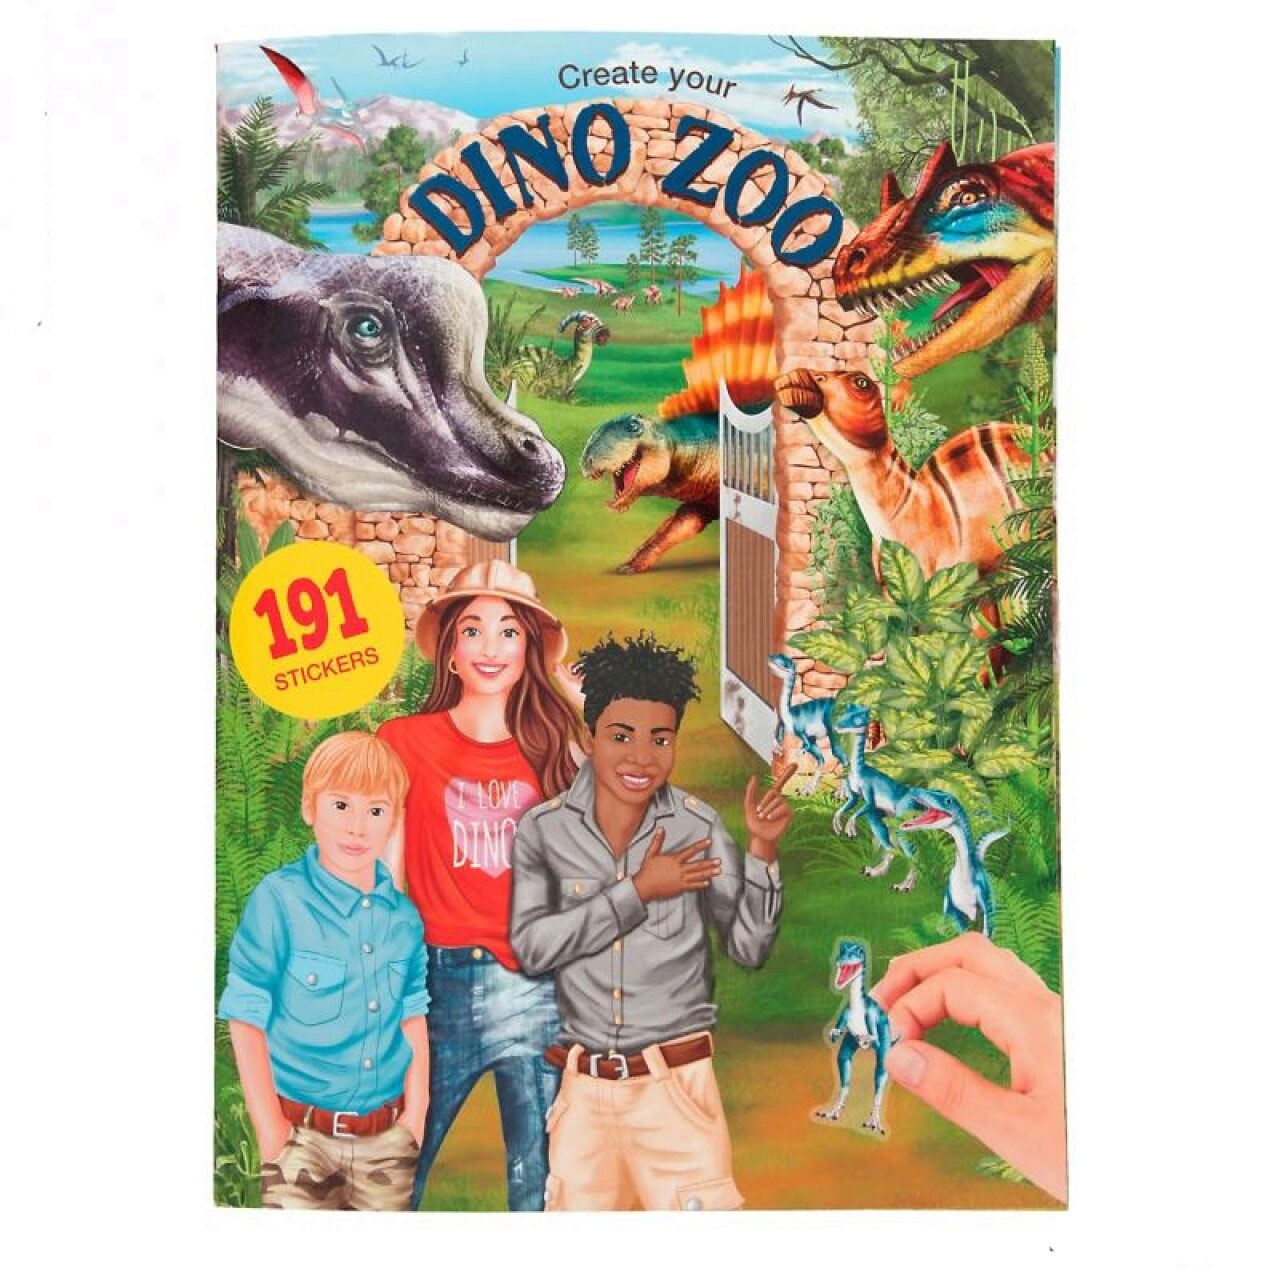 Create your Dino Zoo